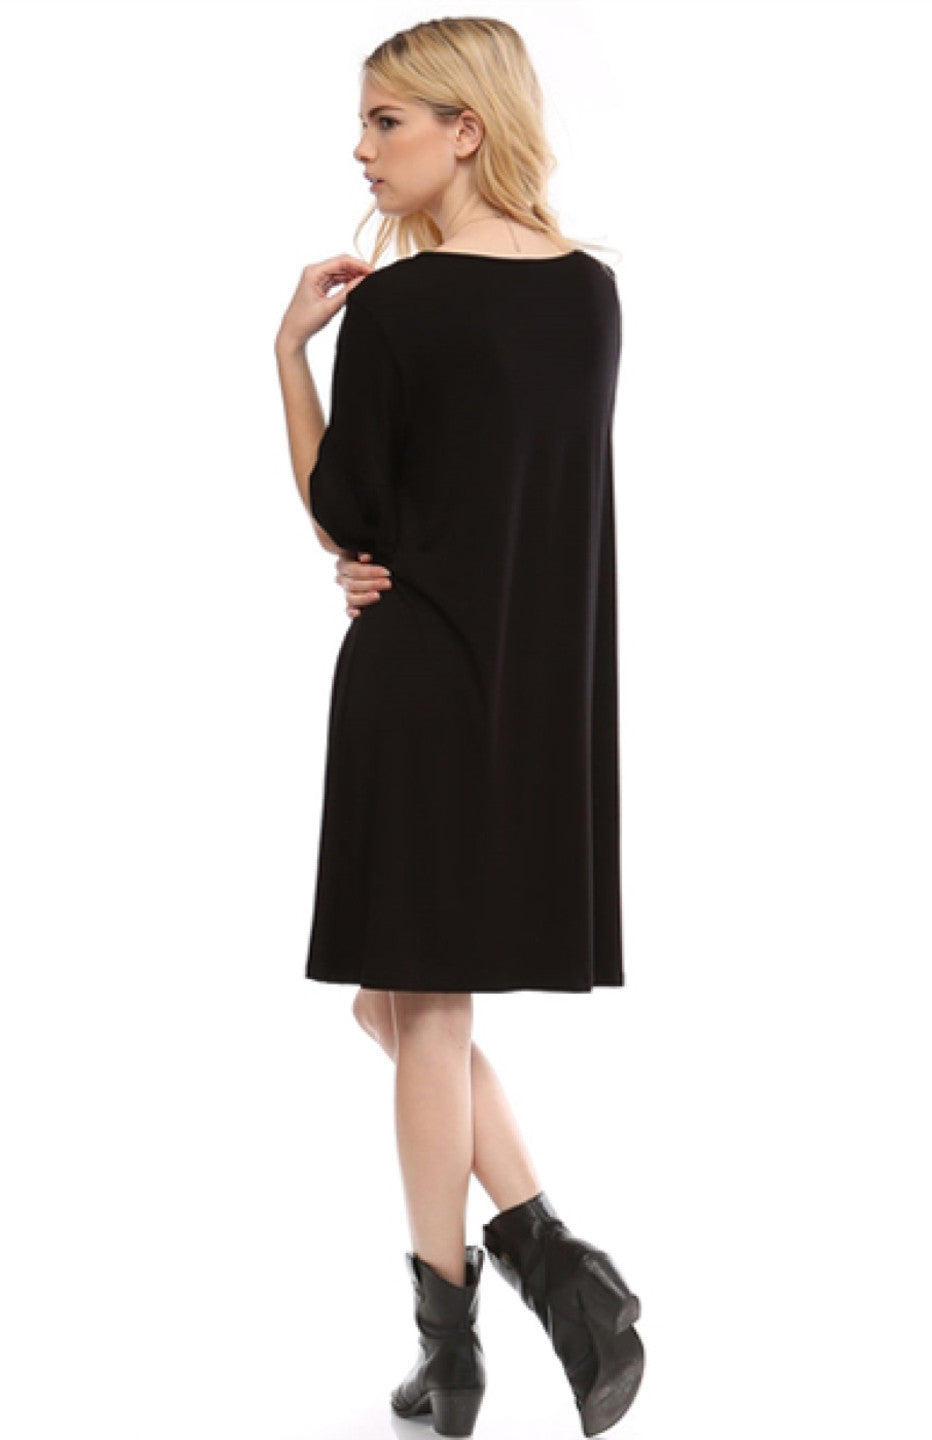 Tunic – Dress BodiLove Store Oversize Sleeve Bell 3/4 Fashion